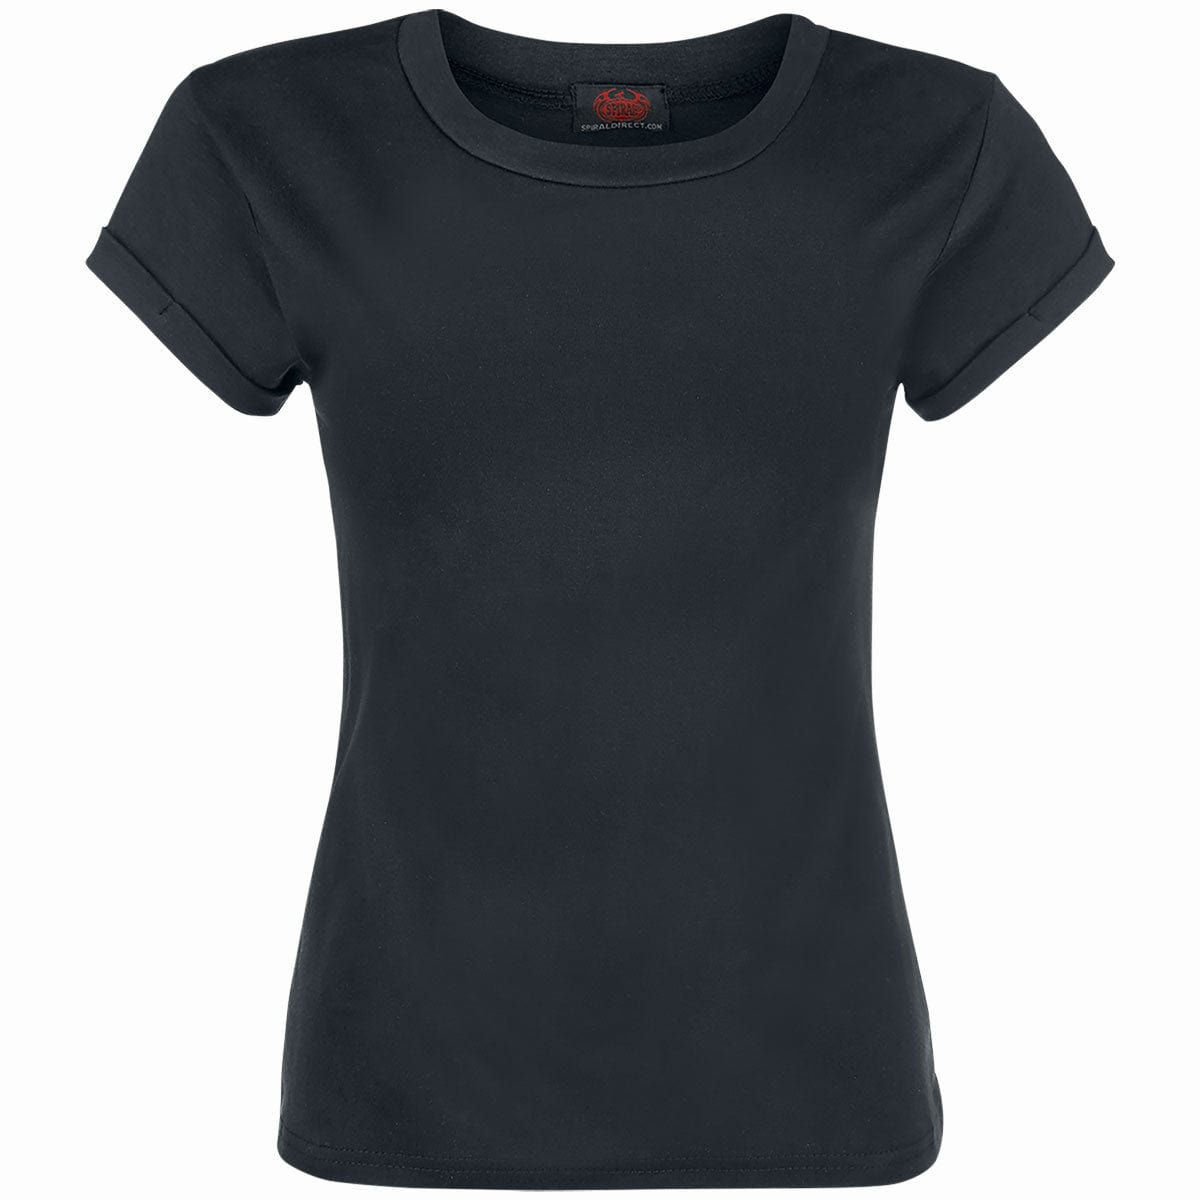 URBAN FASHION - Girls Boatneck Cap Sleeve T-Shirt